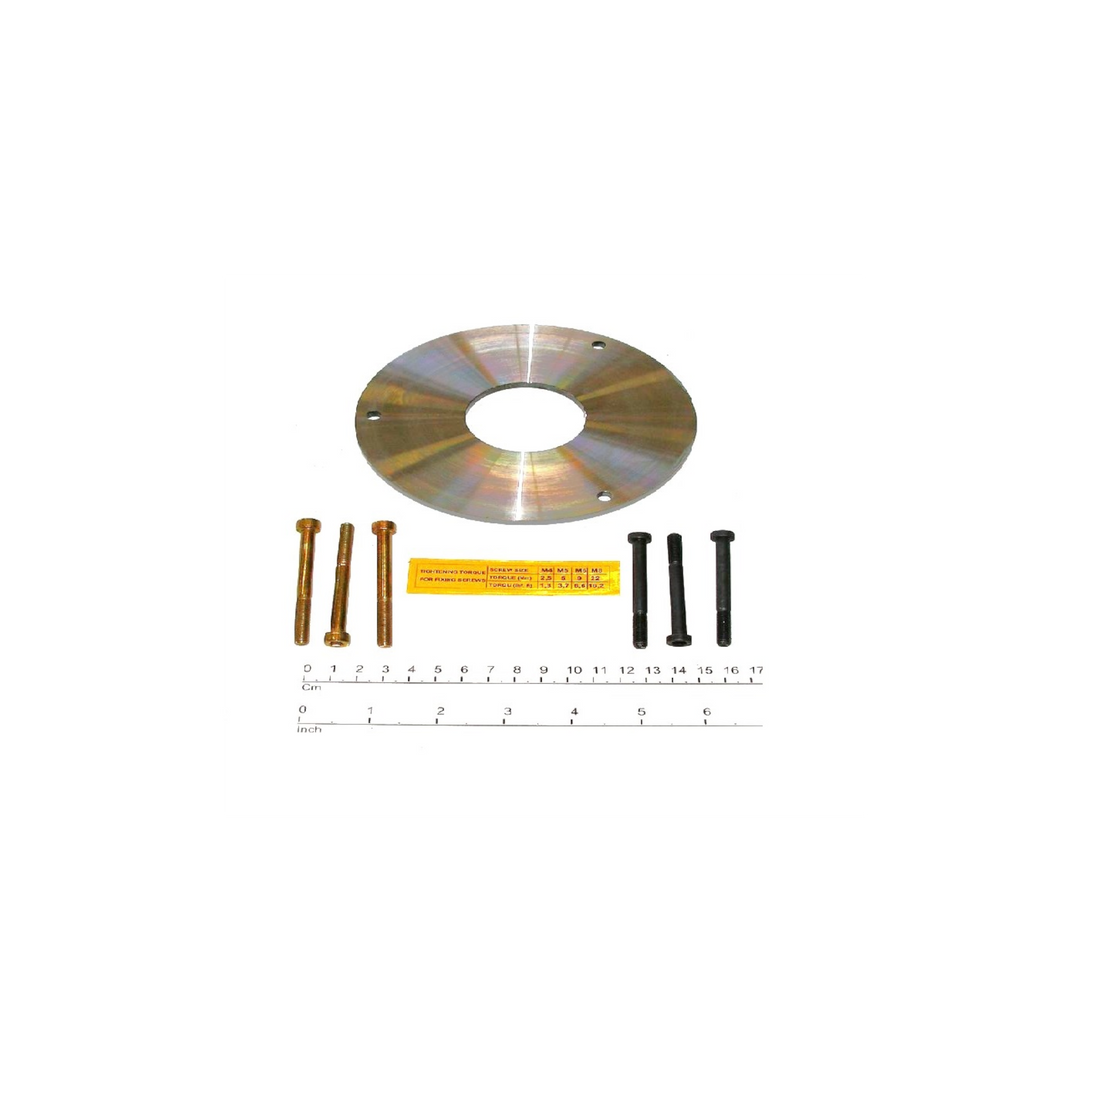 R&M Parts - Friction Disc, Part Number: 52269592